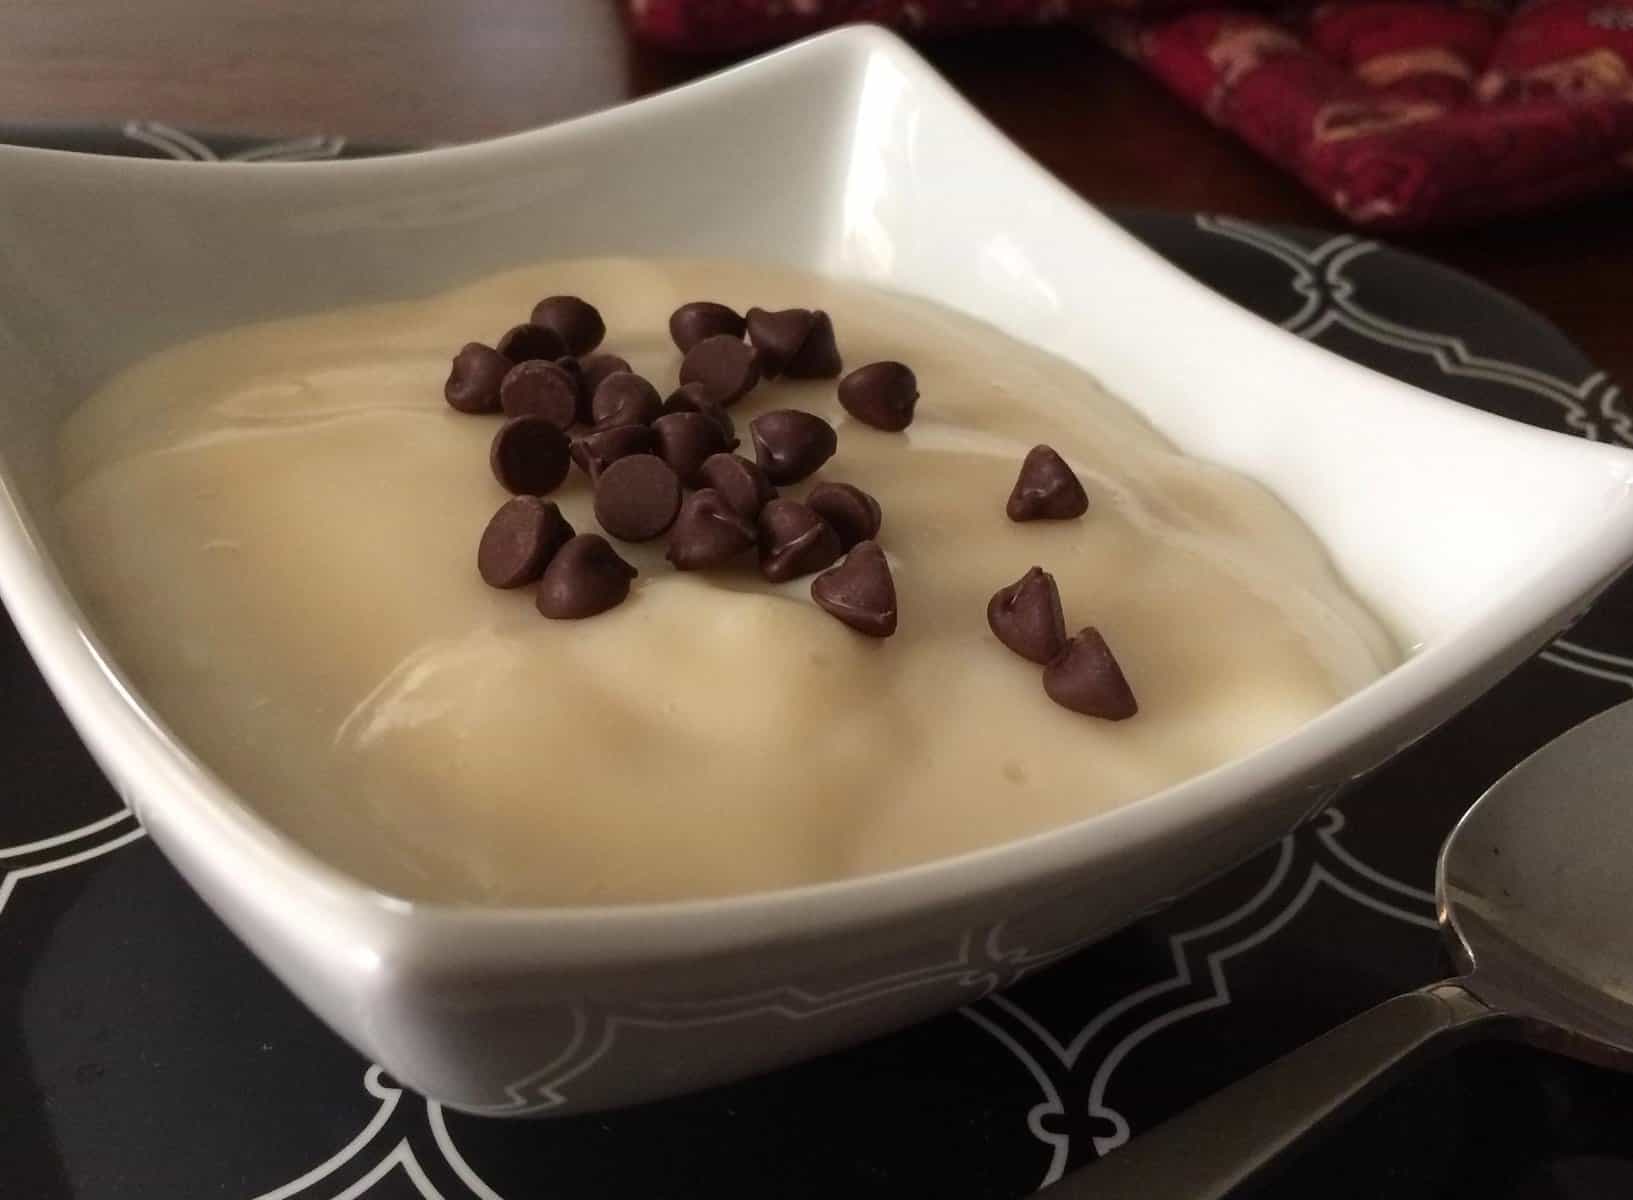  Dive into a creamy and delicious bowl of vanilla pudding.